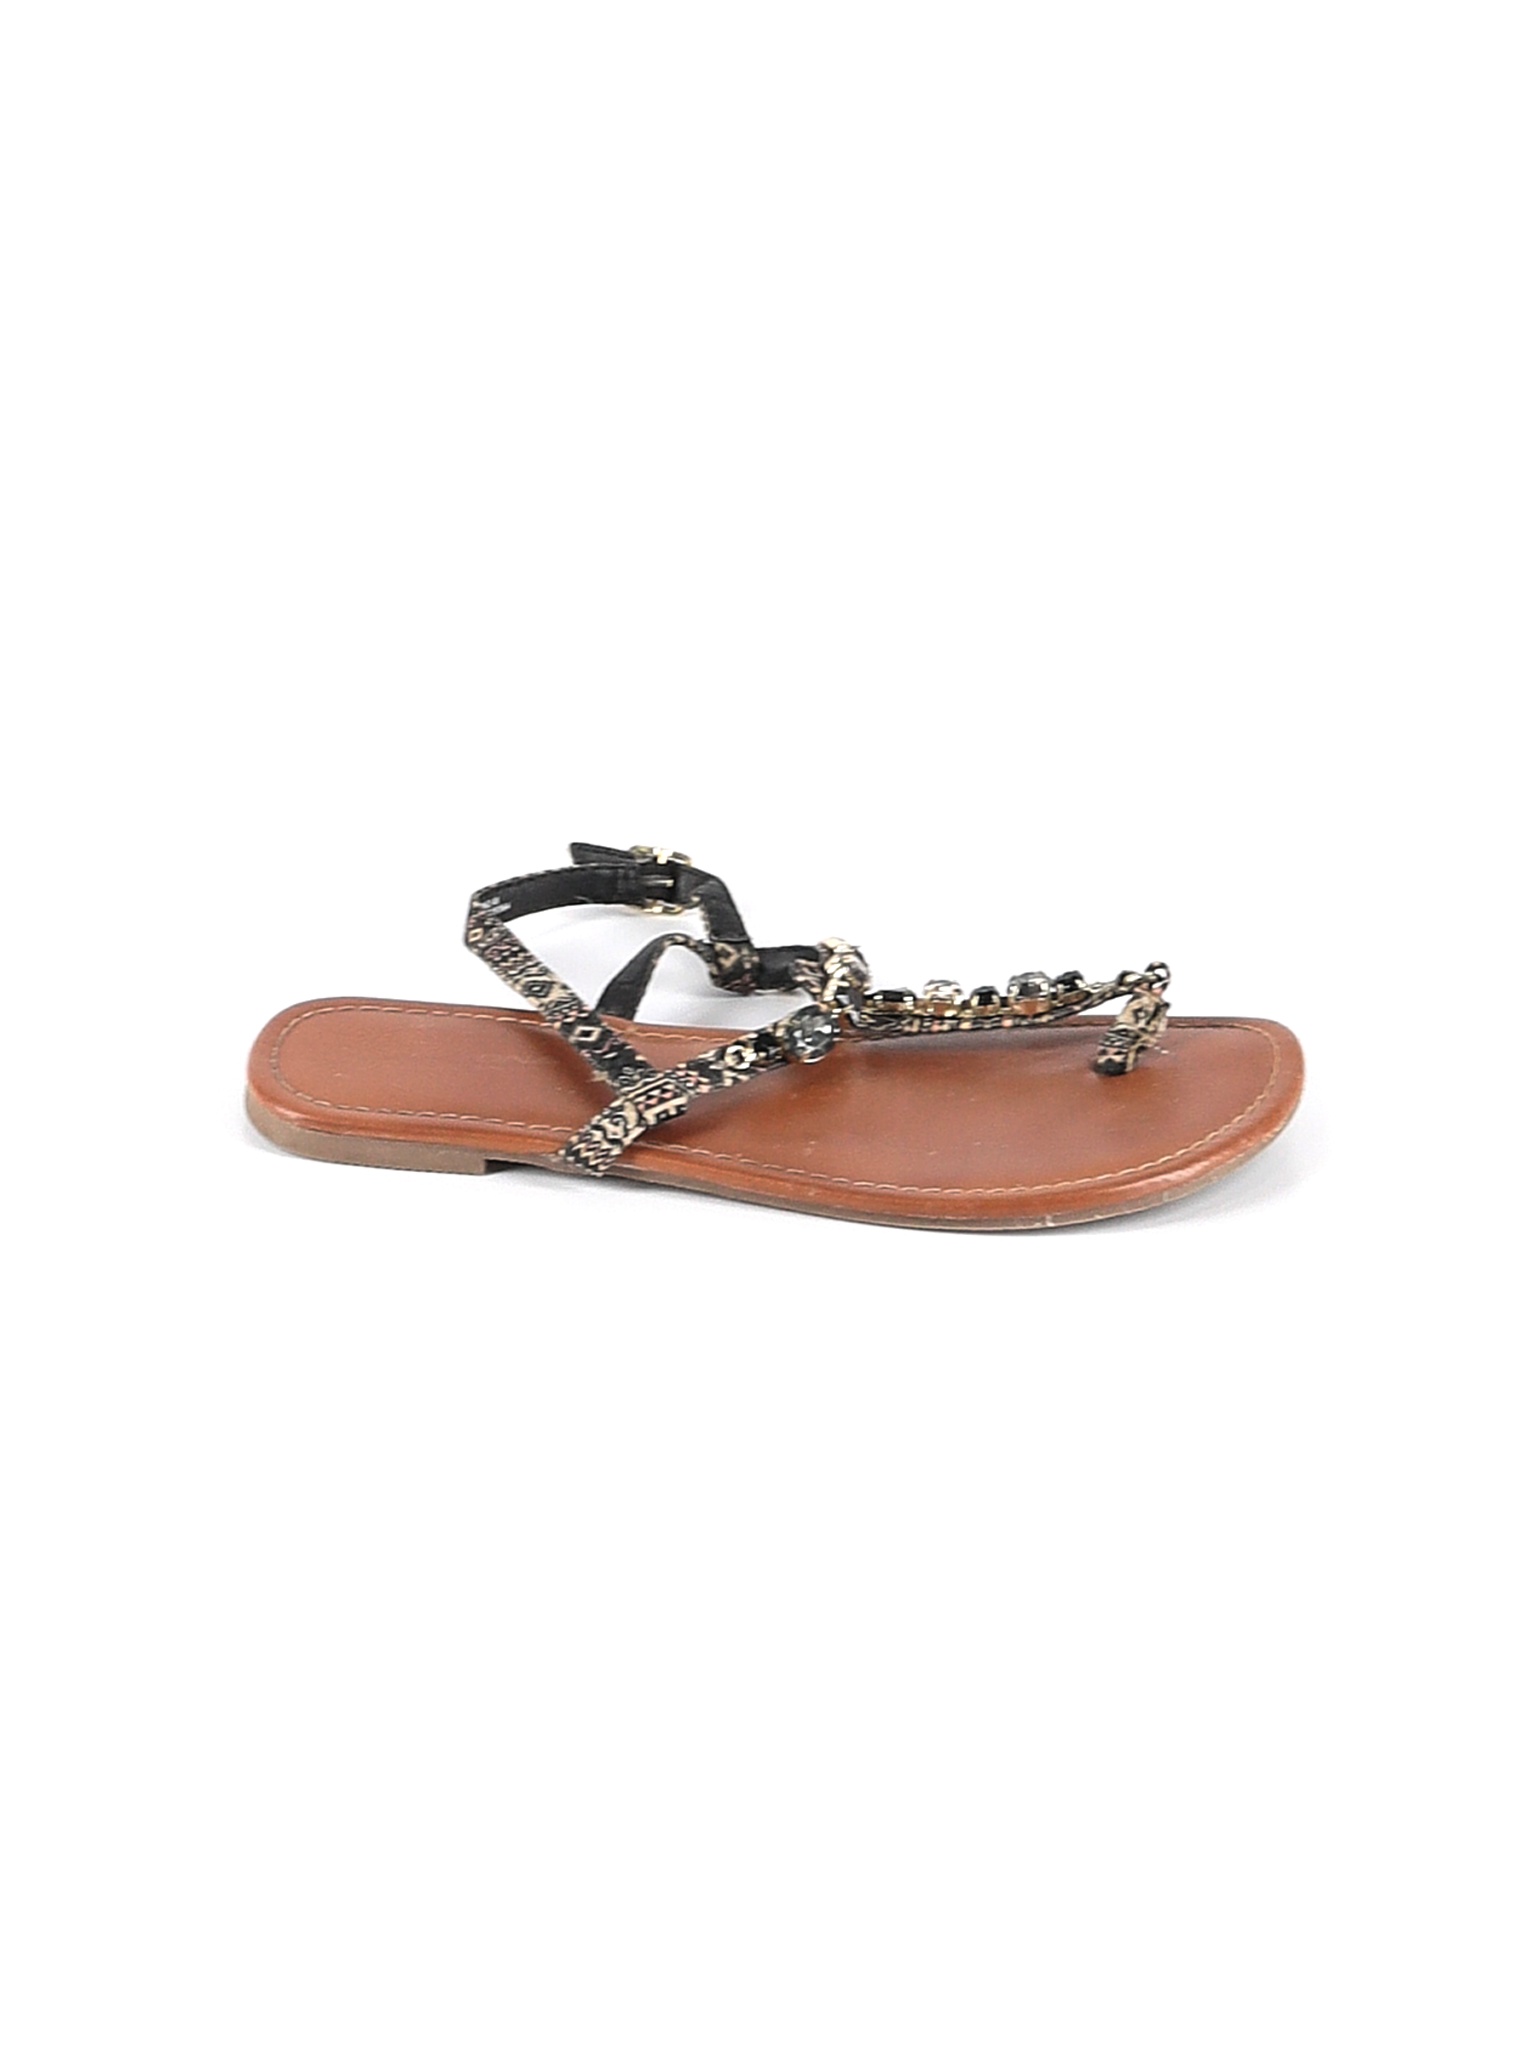 Arizona Jean Company Women Brown Sandals US 8 | eBay